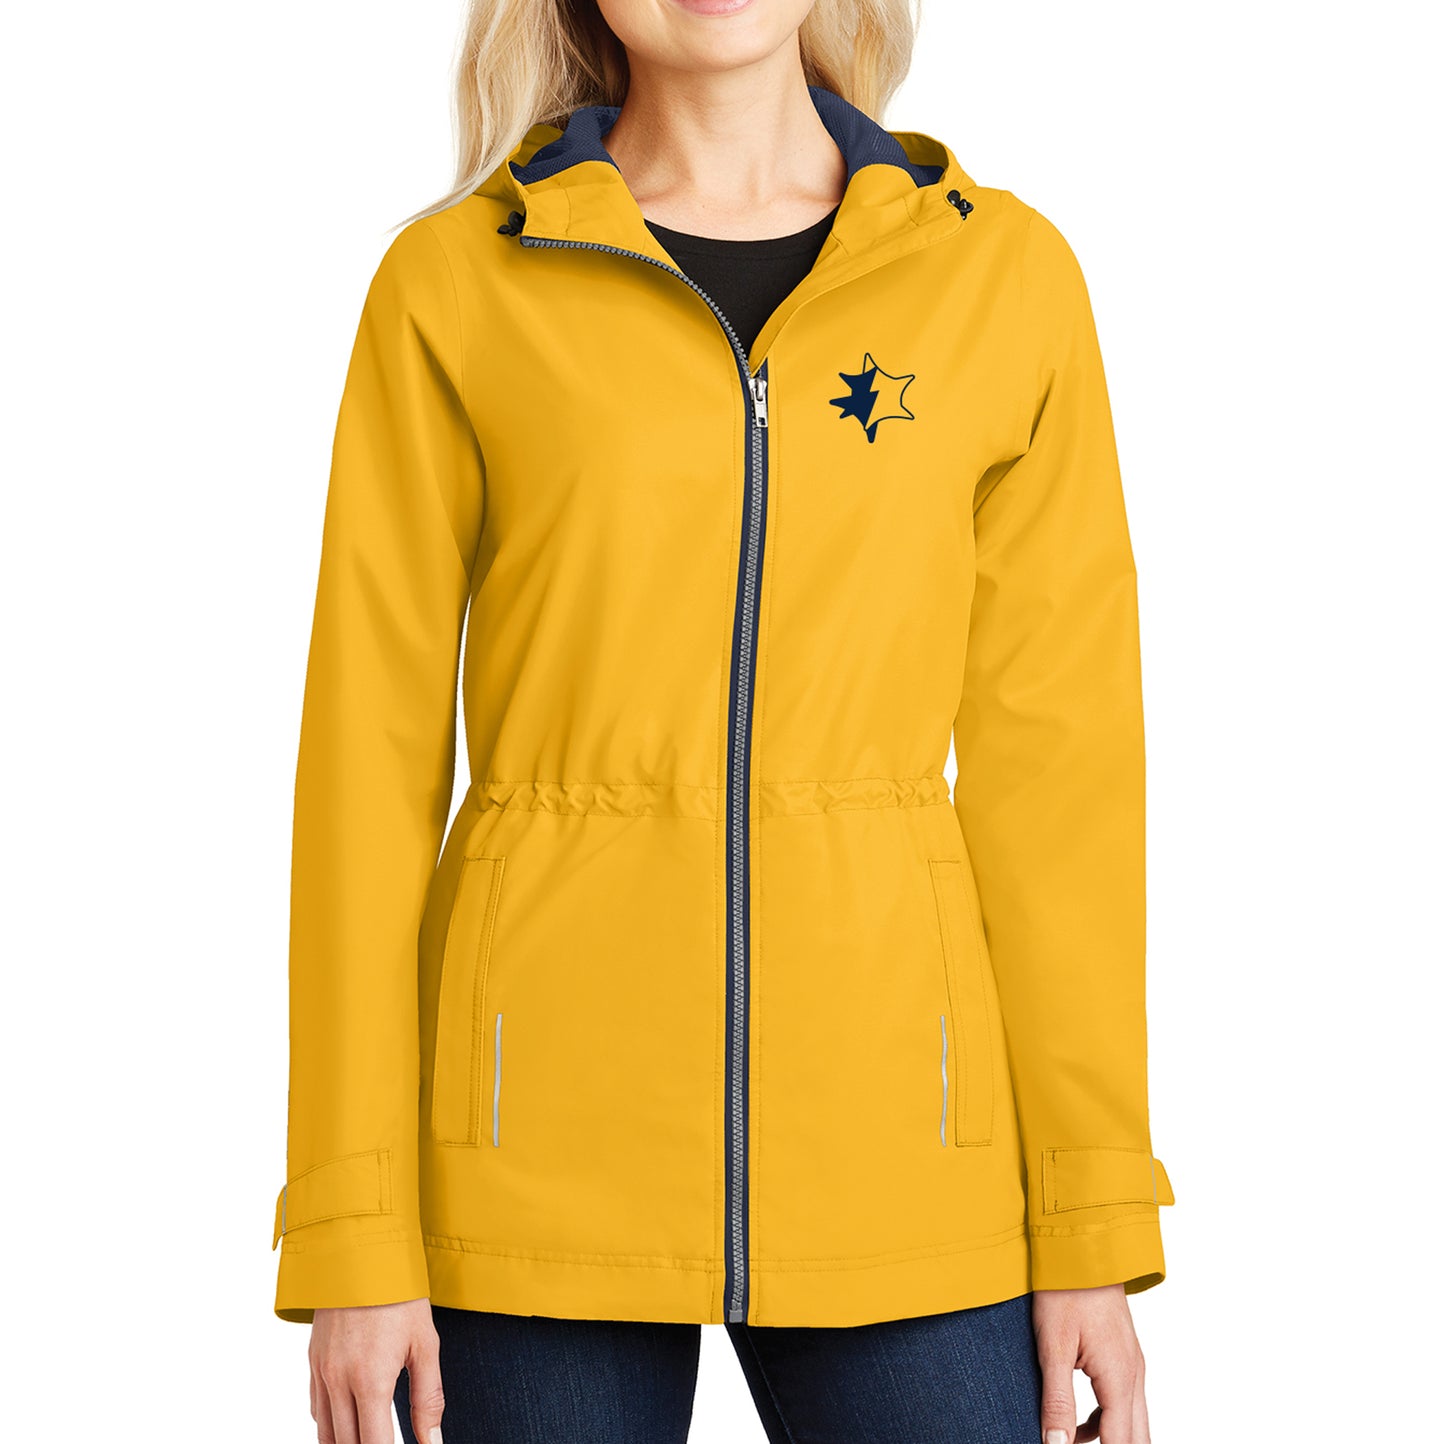 UMCU Women's Rain Jacket - Yellow